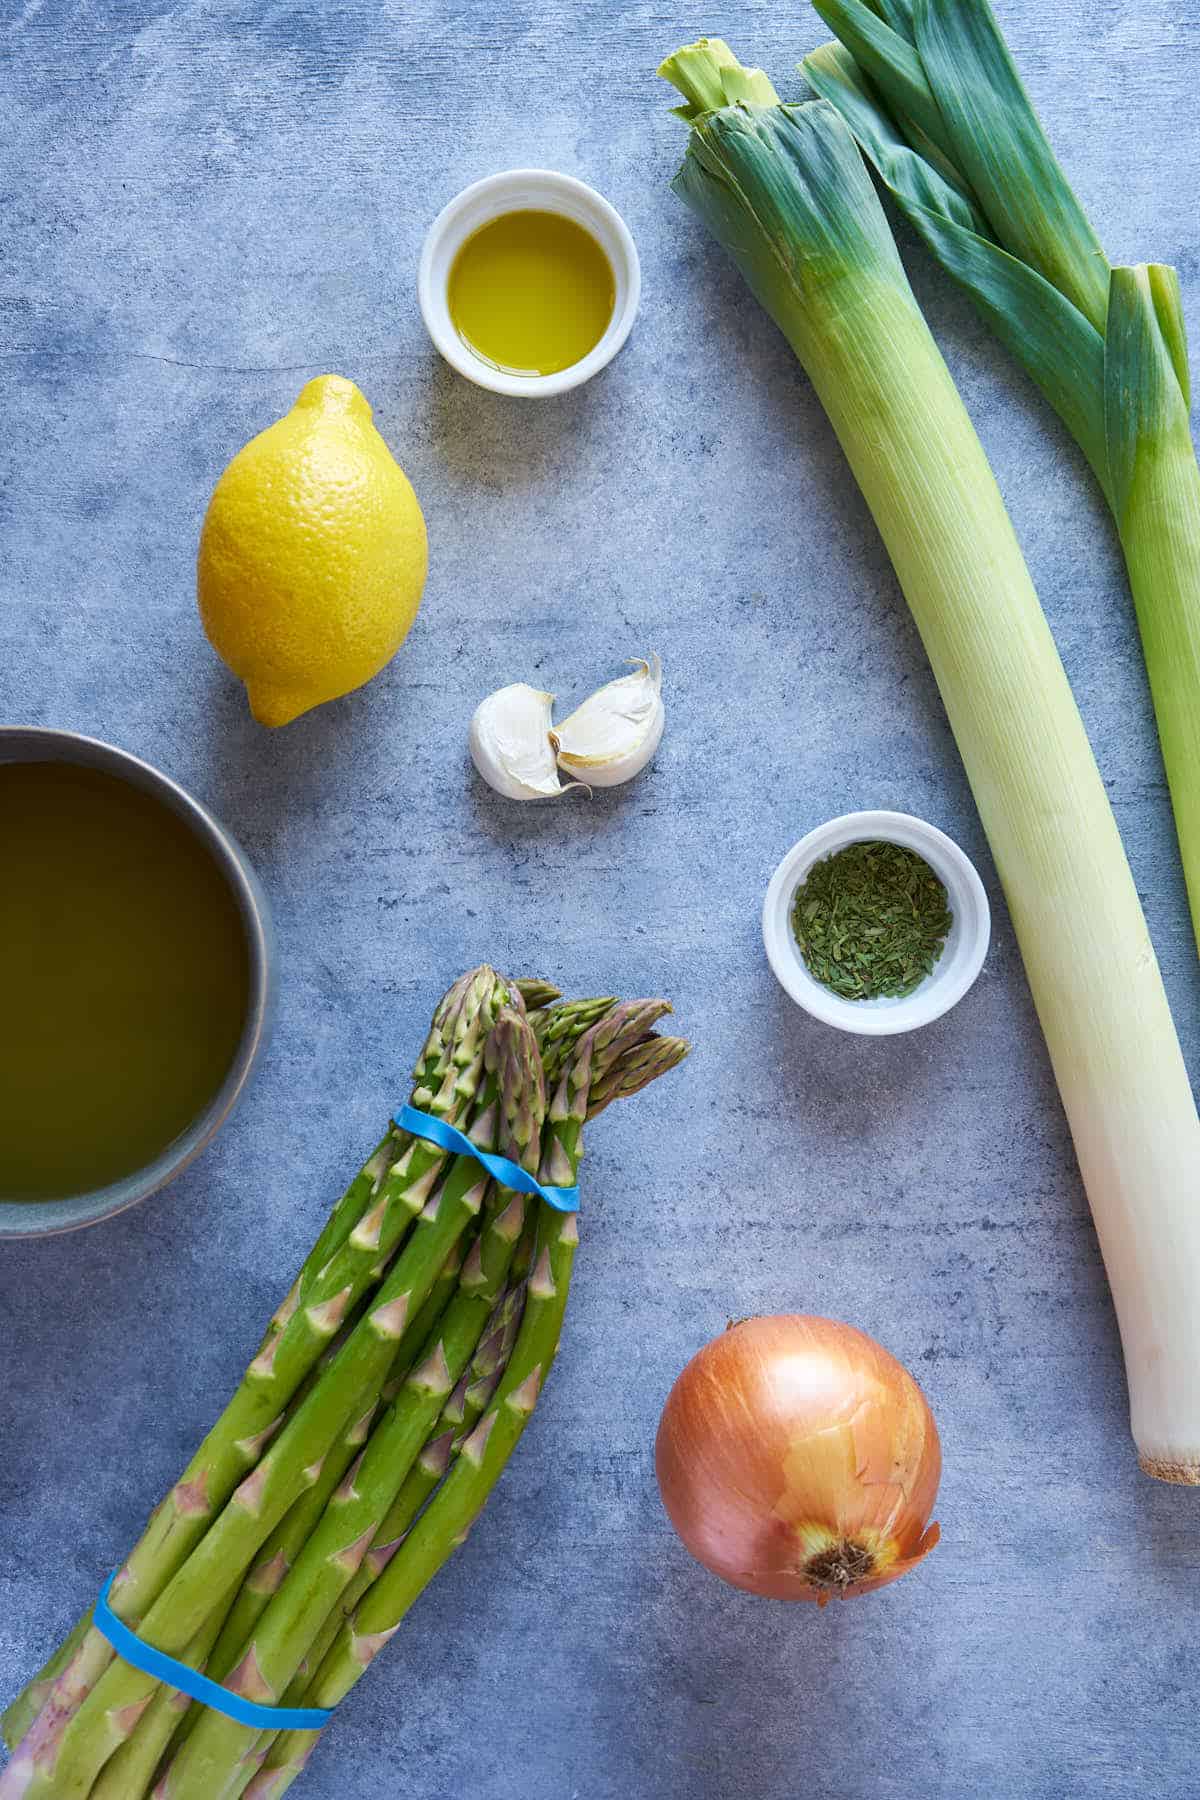 Ingredients to make green soup.  leeks, garlic, tarragon, onion, and broth.